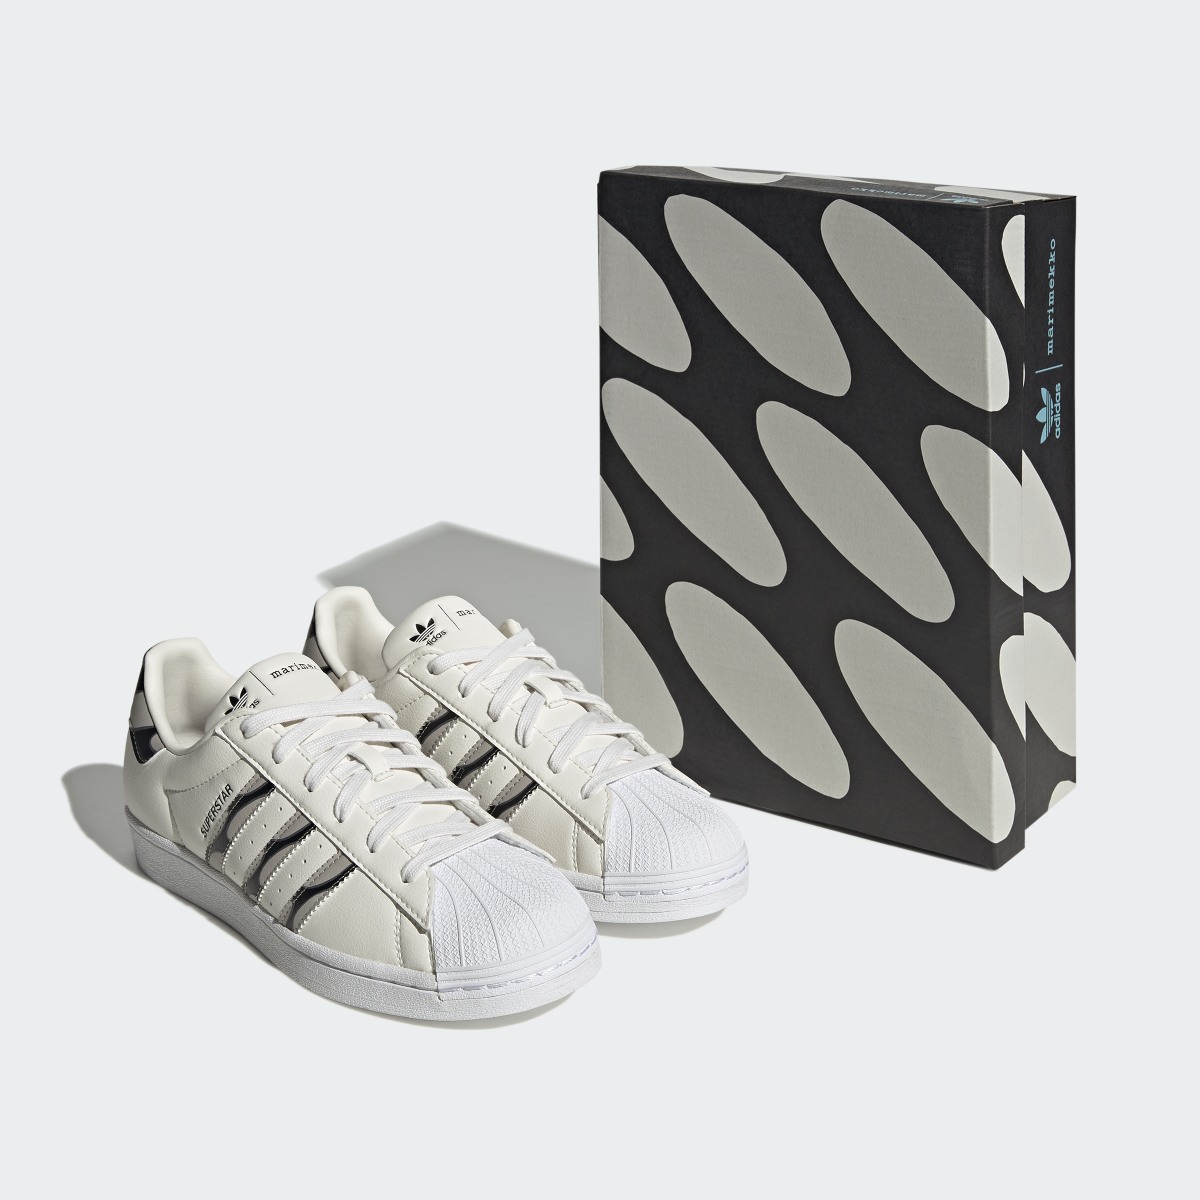 Adidas x Marimekko Superstar Schuh. 10